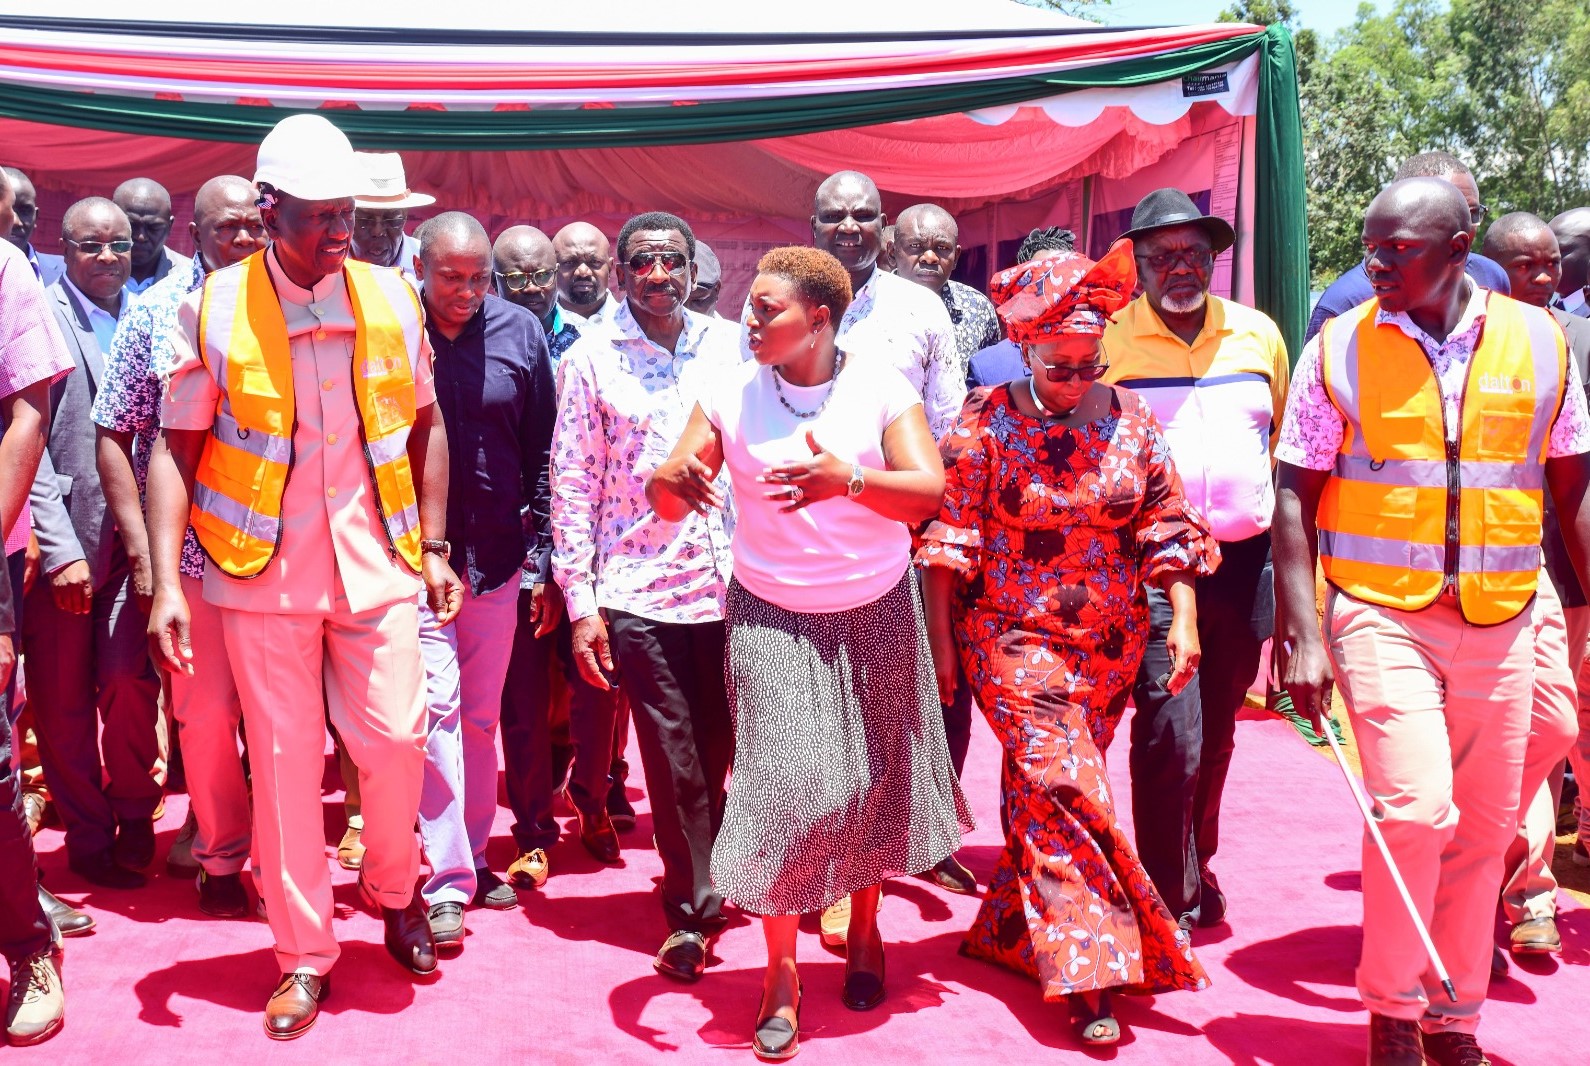 Ugenya Residents Jubilant as President Ruto Launches New Hospital